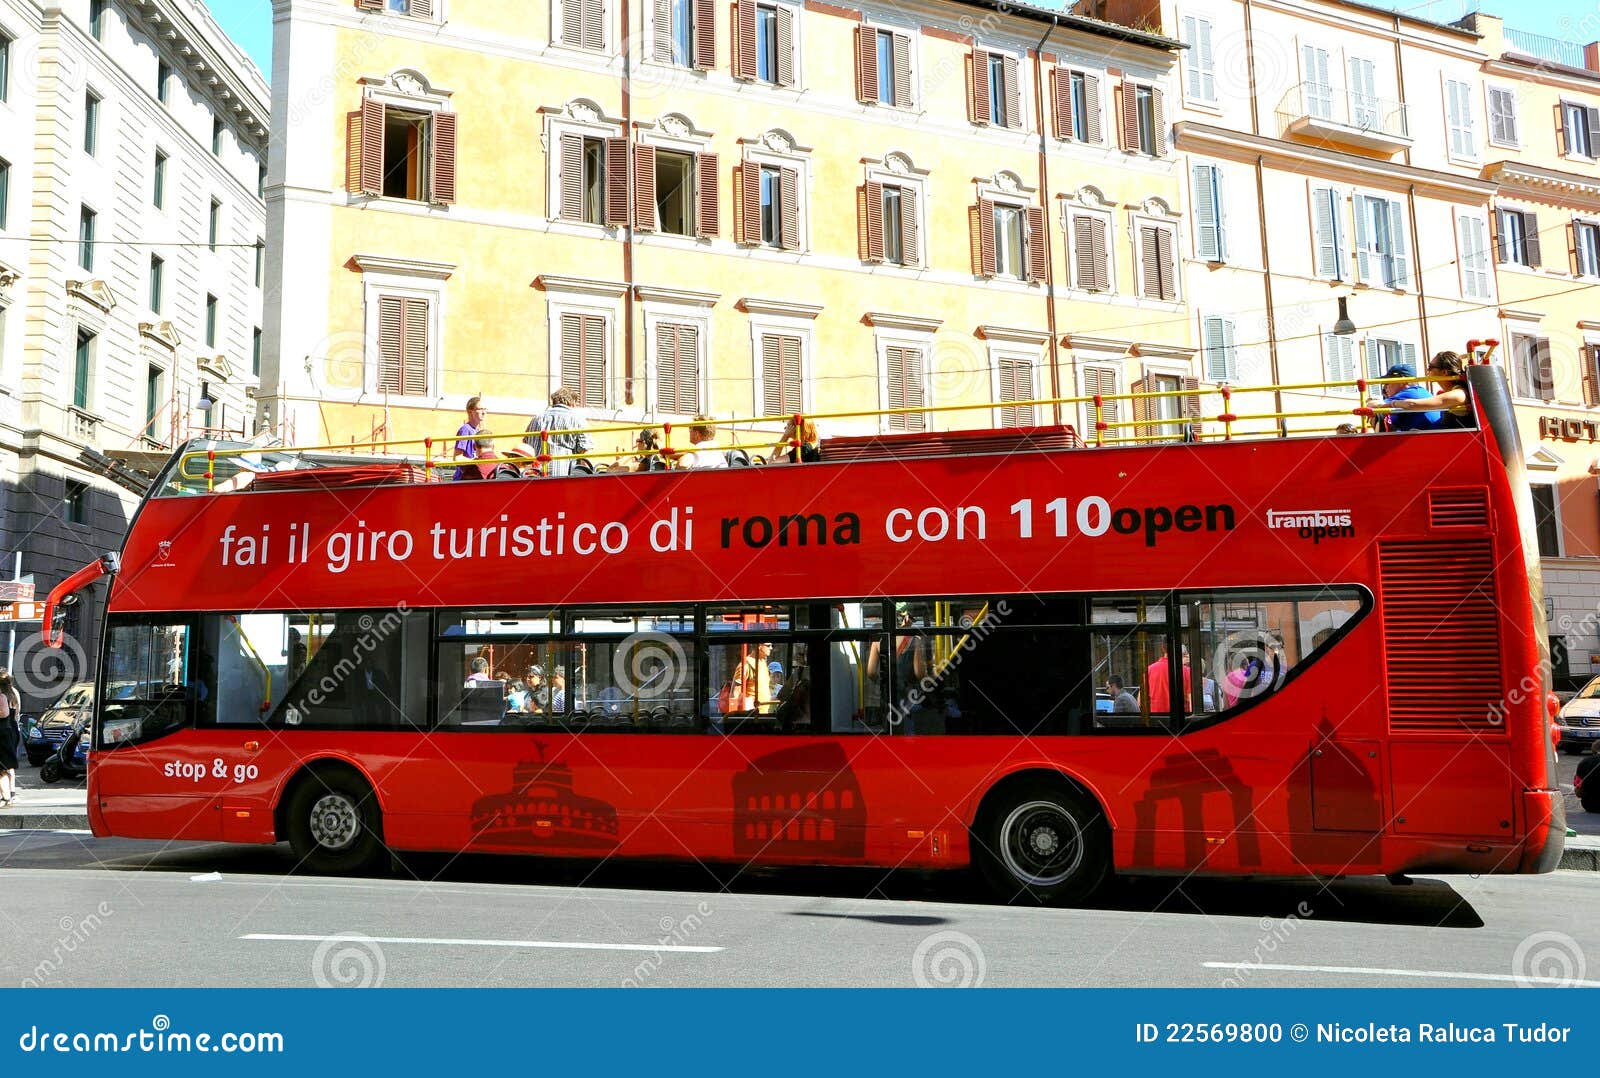 voyage italie bus